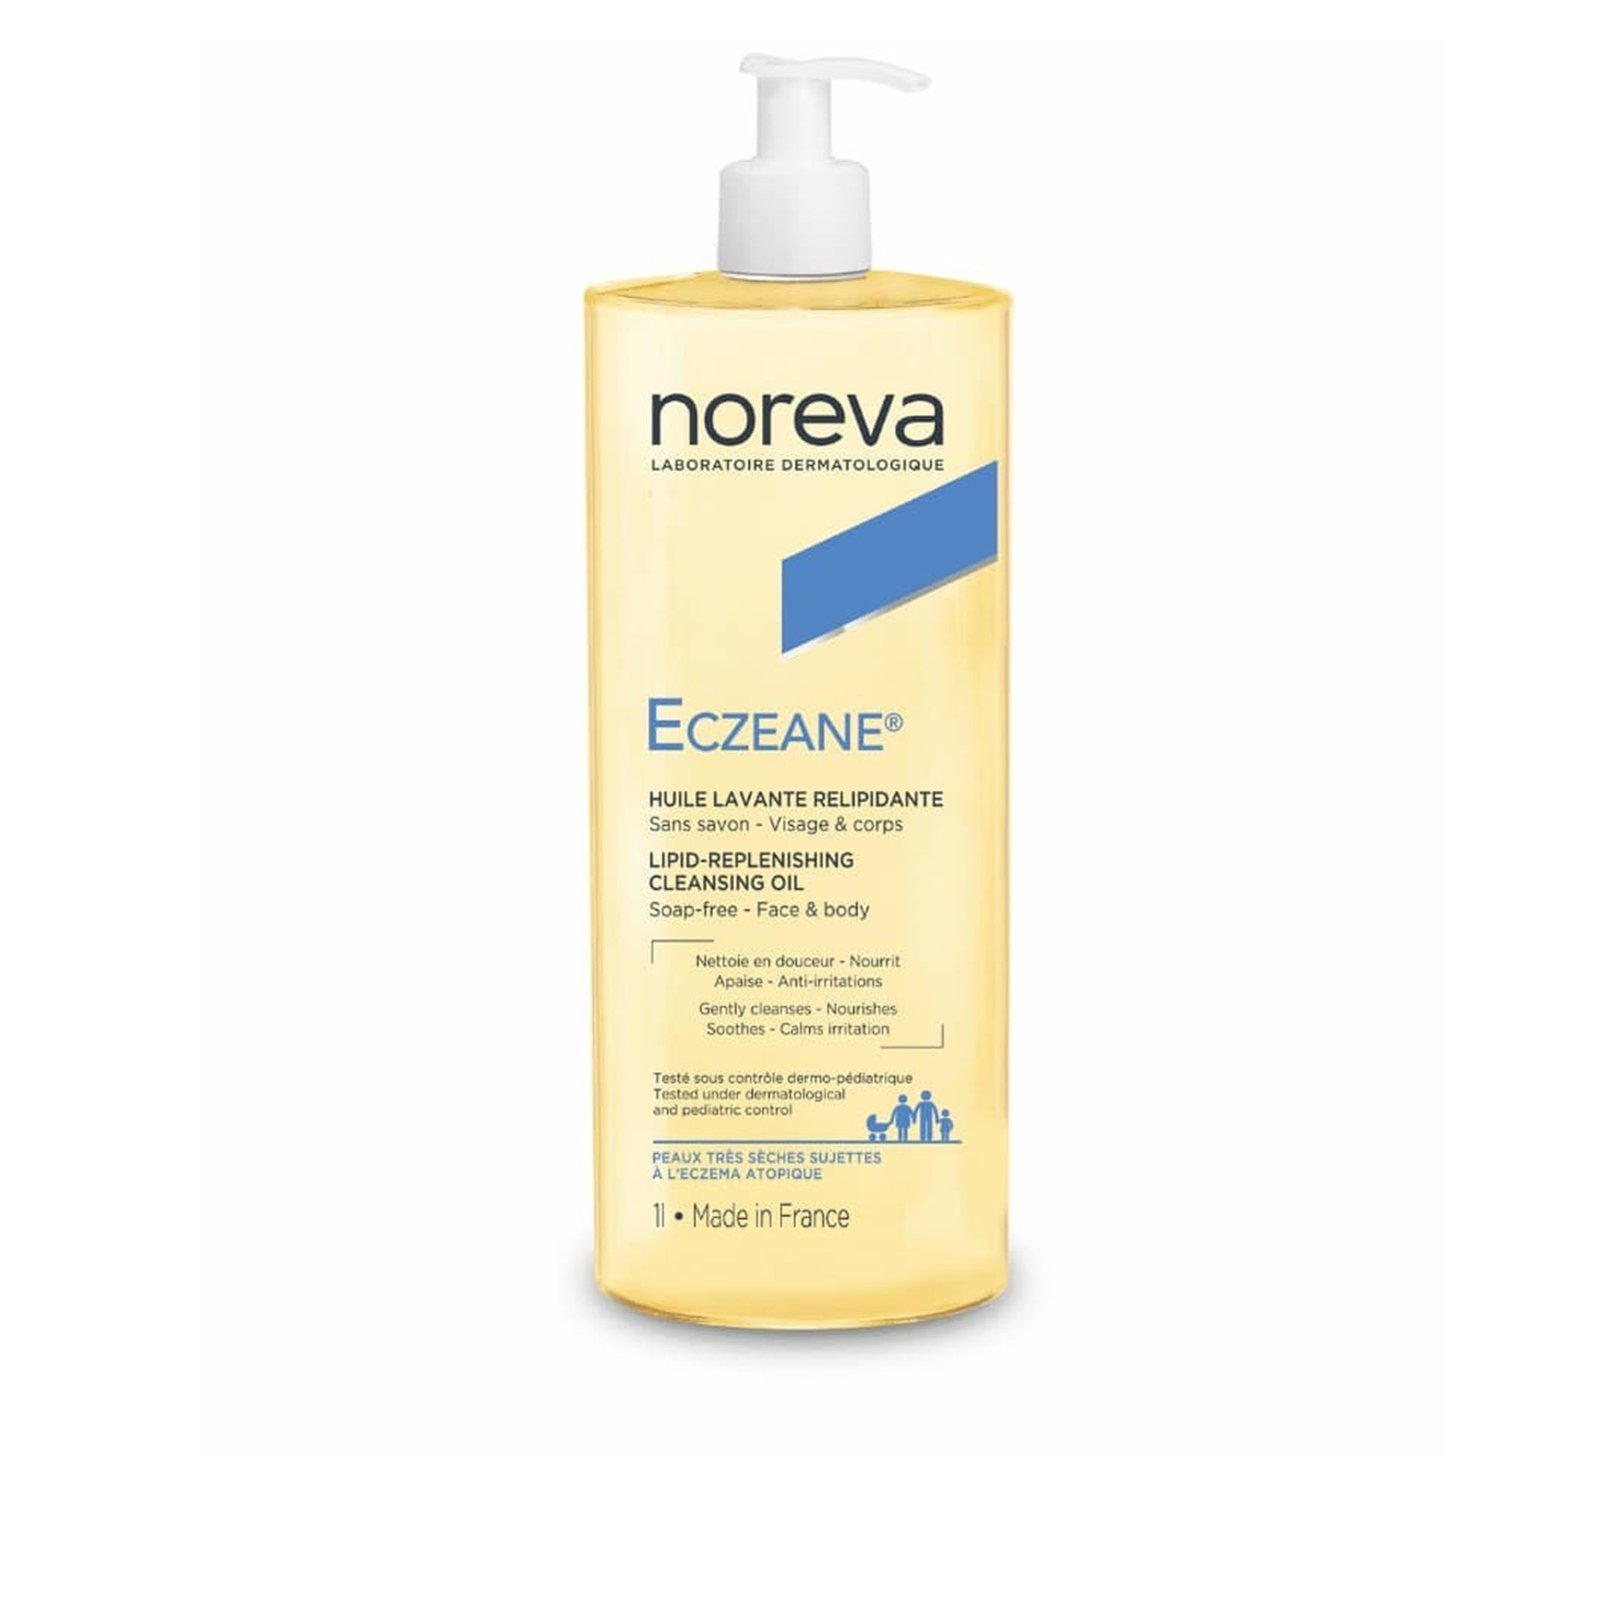 Noreva Eczeane Lipid-Replenishing Cleansing Oil 1L